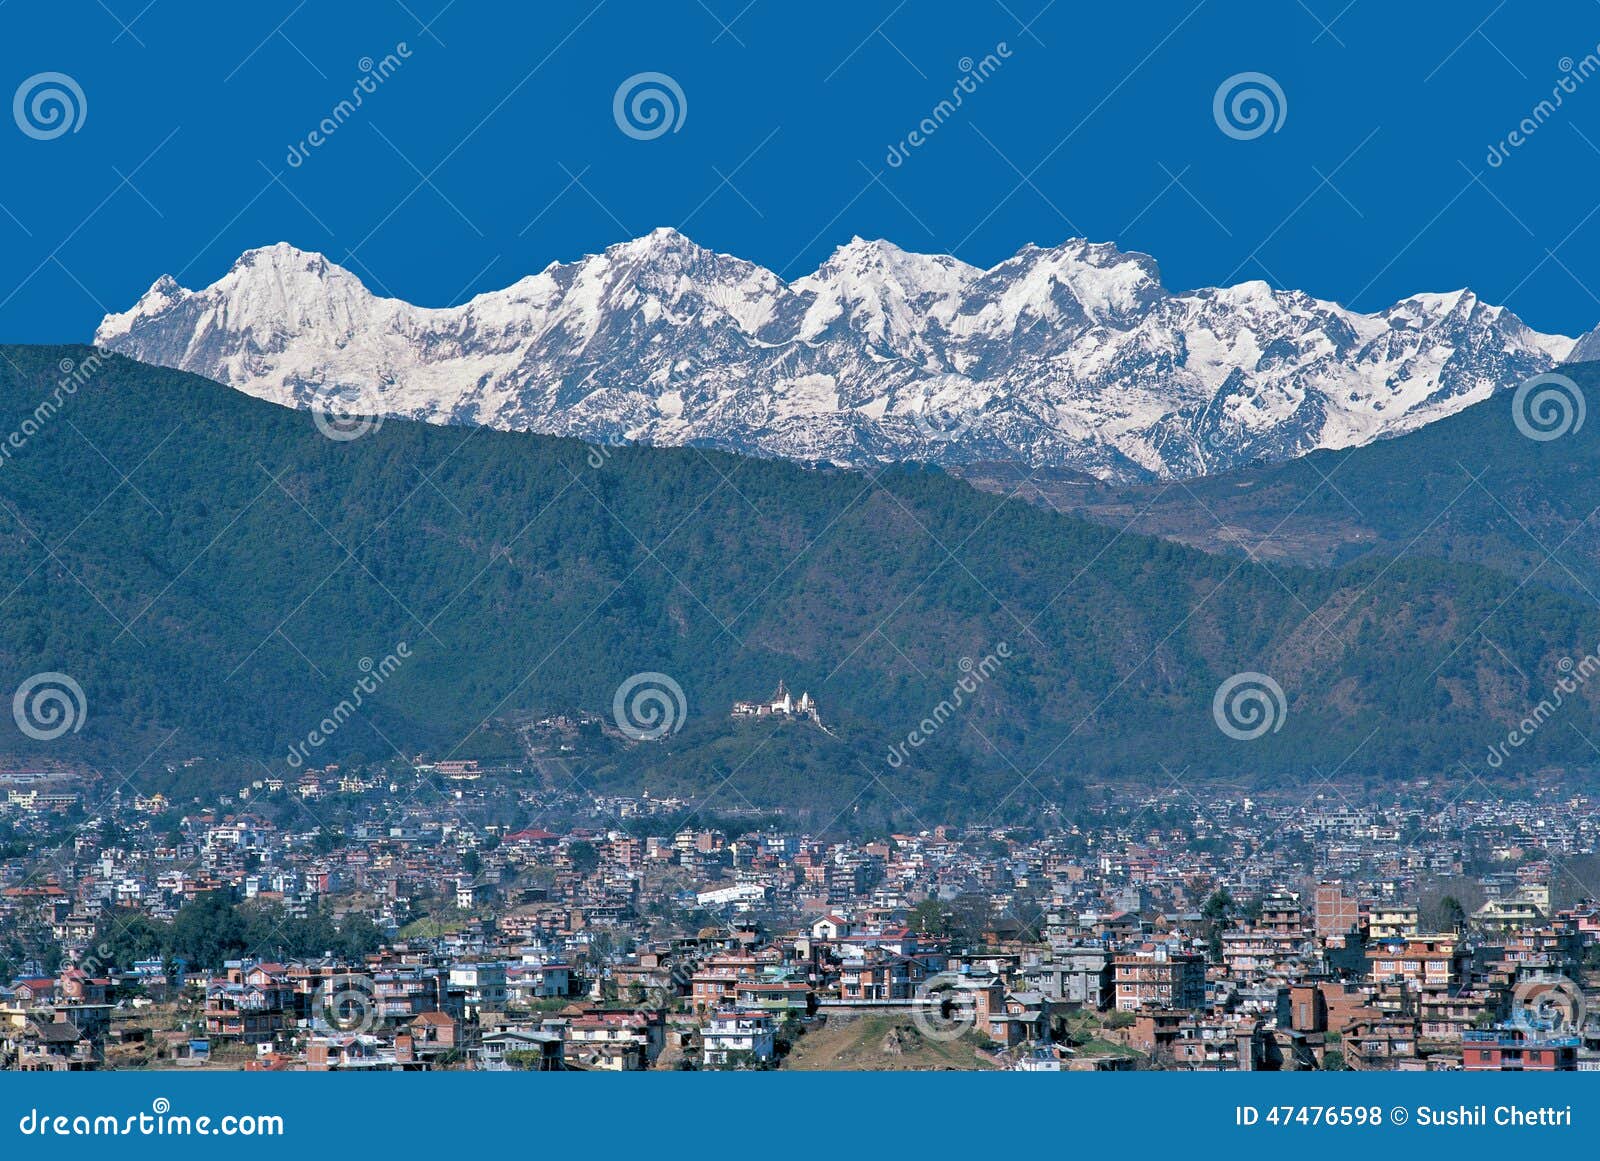 kathmandu valley & ganesh himal, nepal